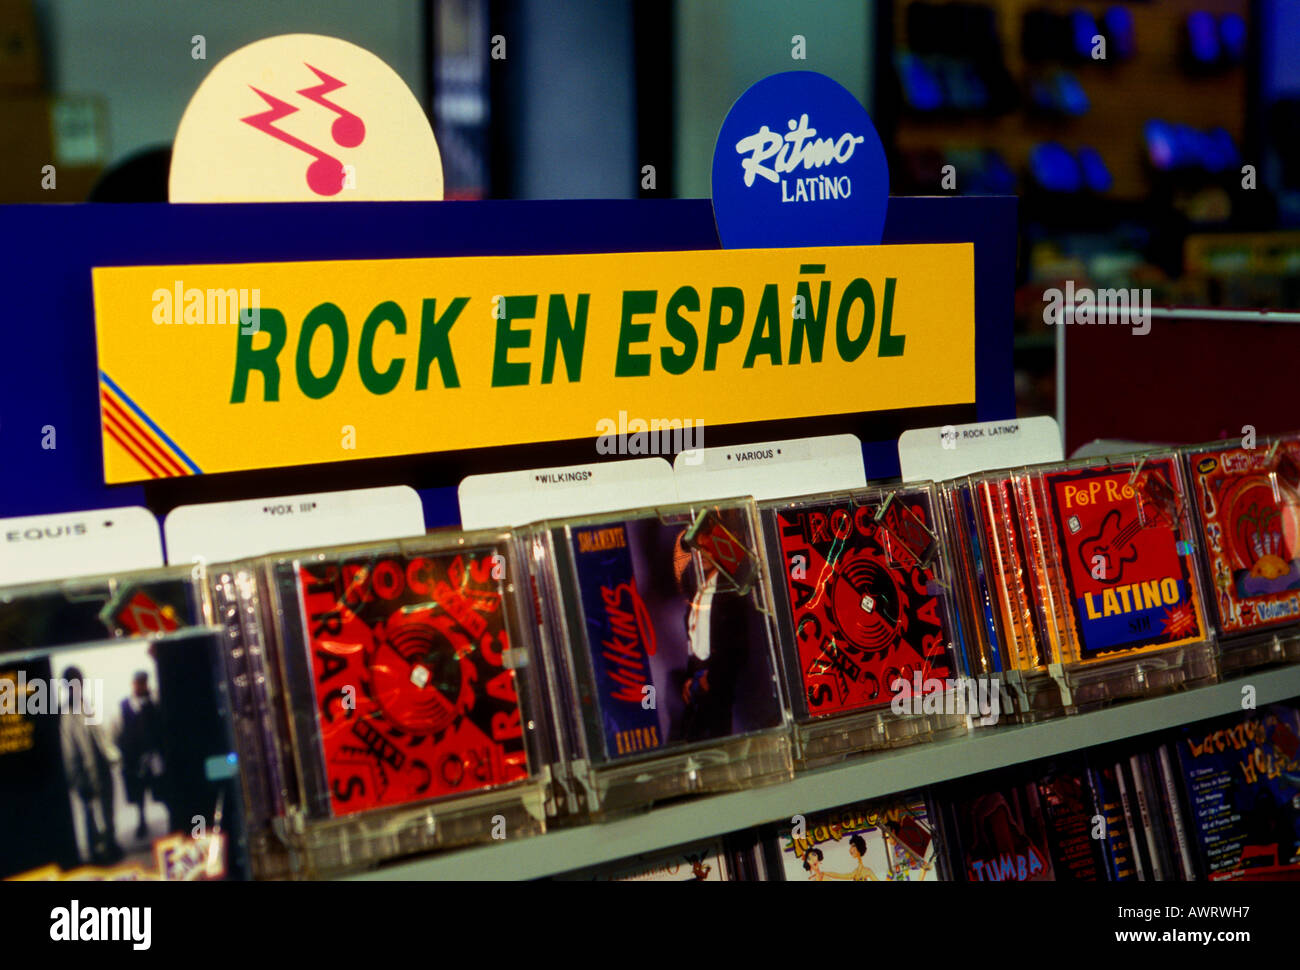 rock en Espanol, Spanish rock music, Latin American rock music, rock and roll music, music store, Mission District, San Francisco, California Stock Photo